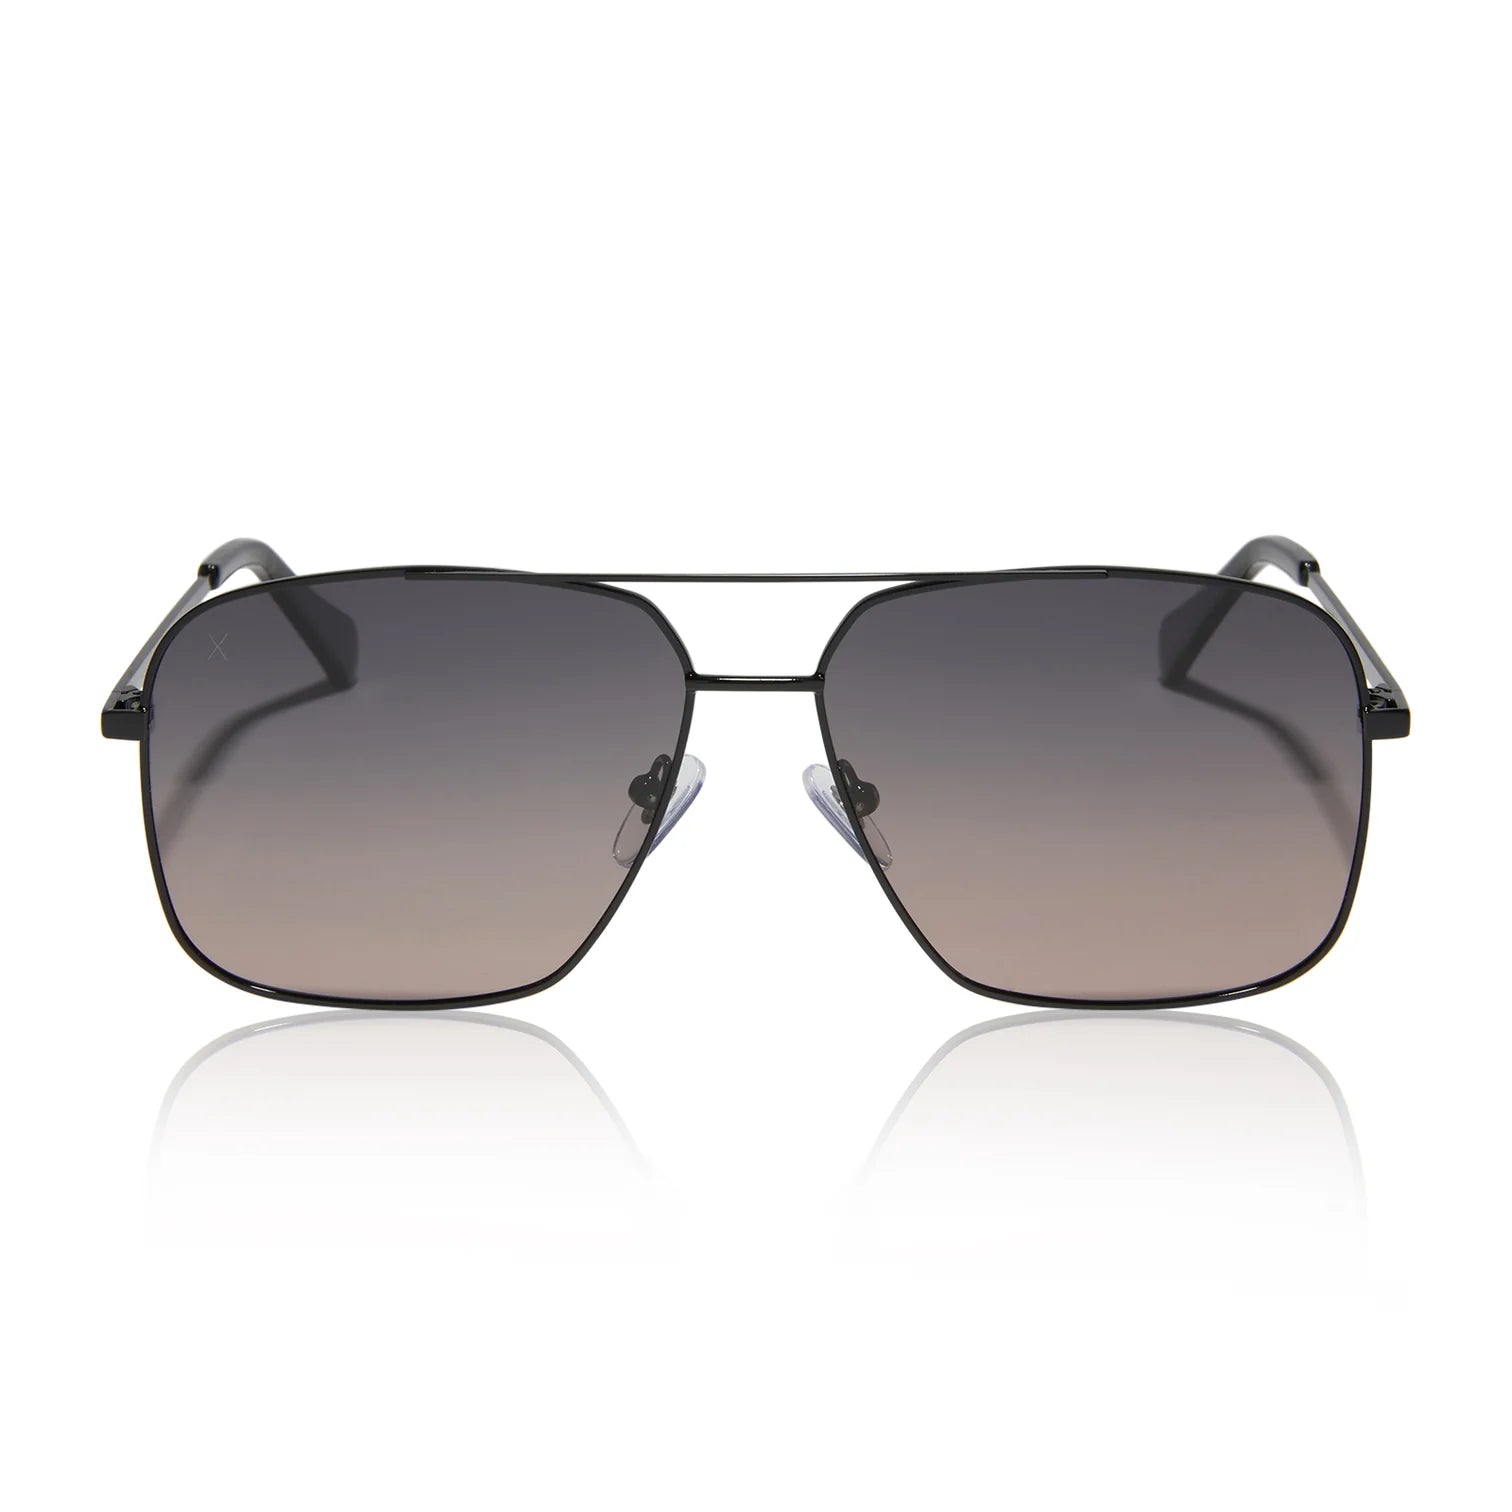 Encino Black & Orchid Gradient Polarized Sunglasses